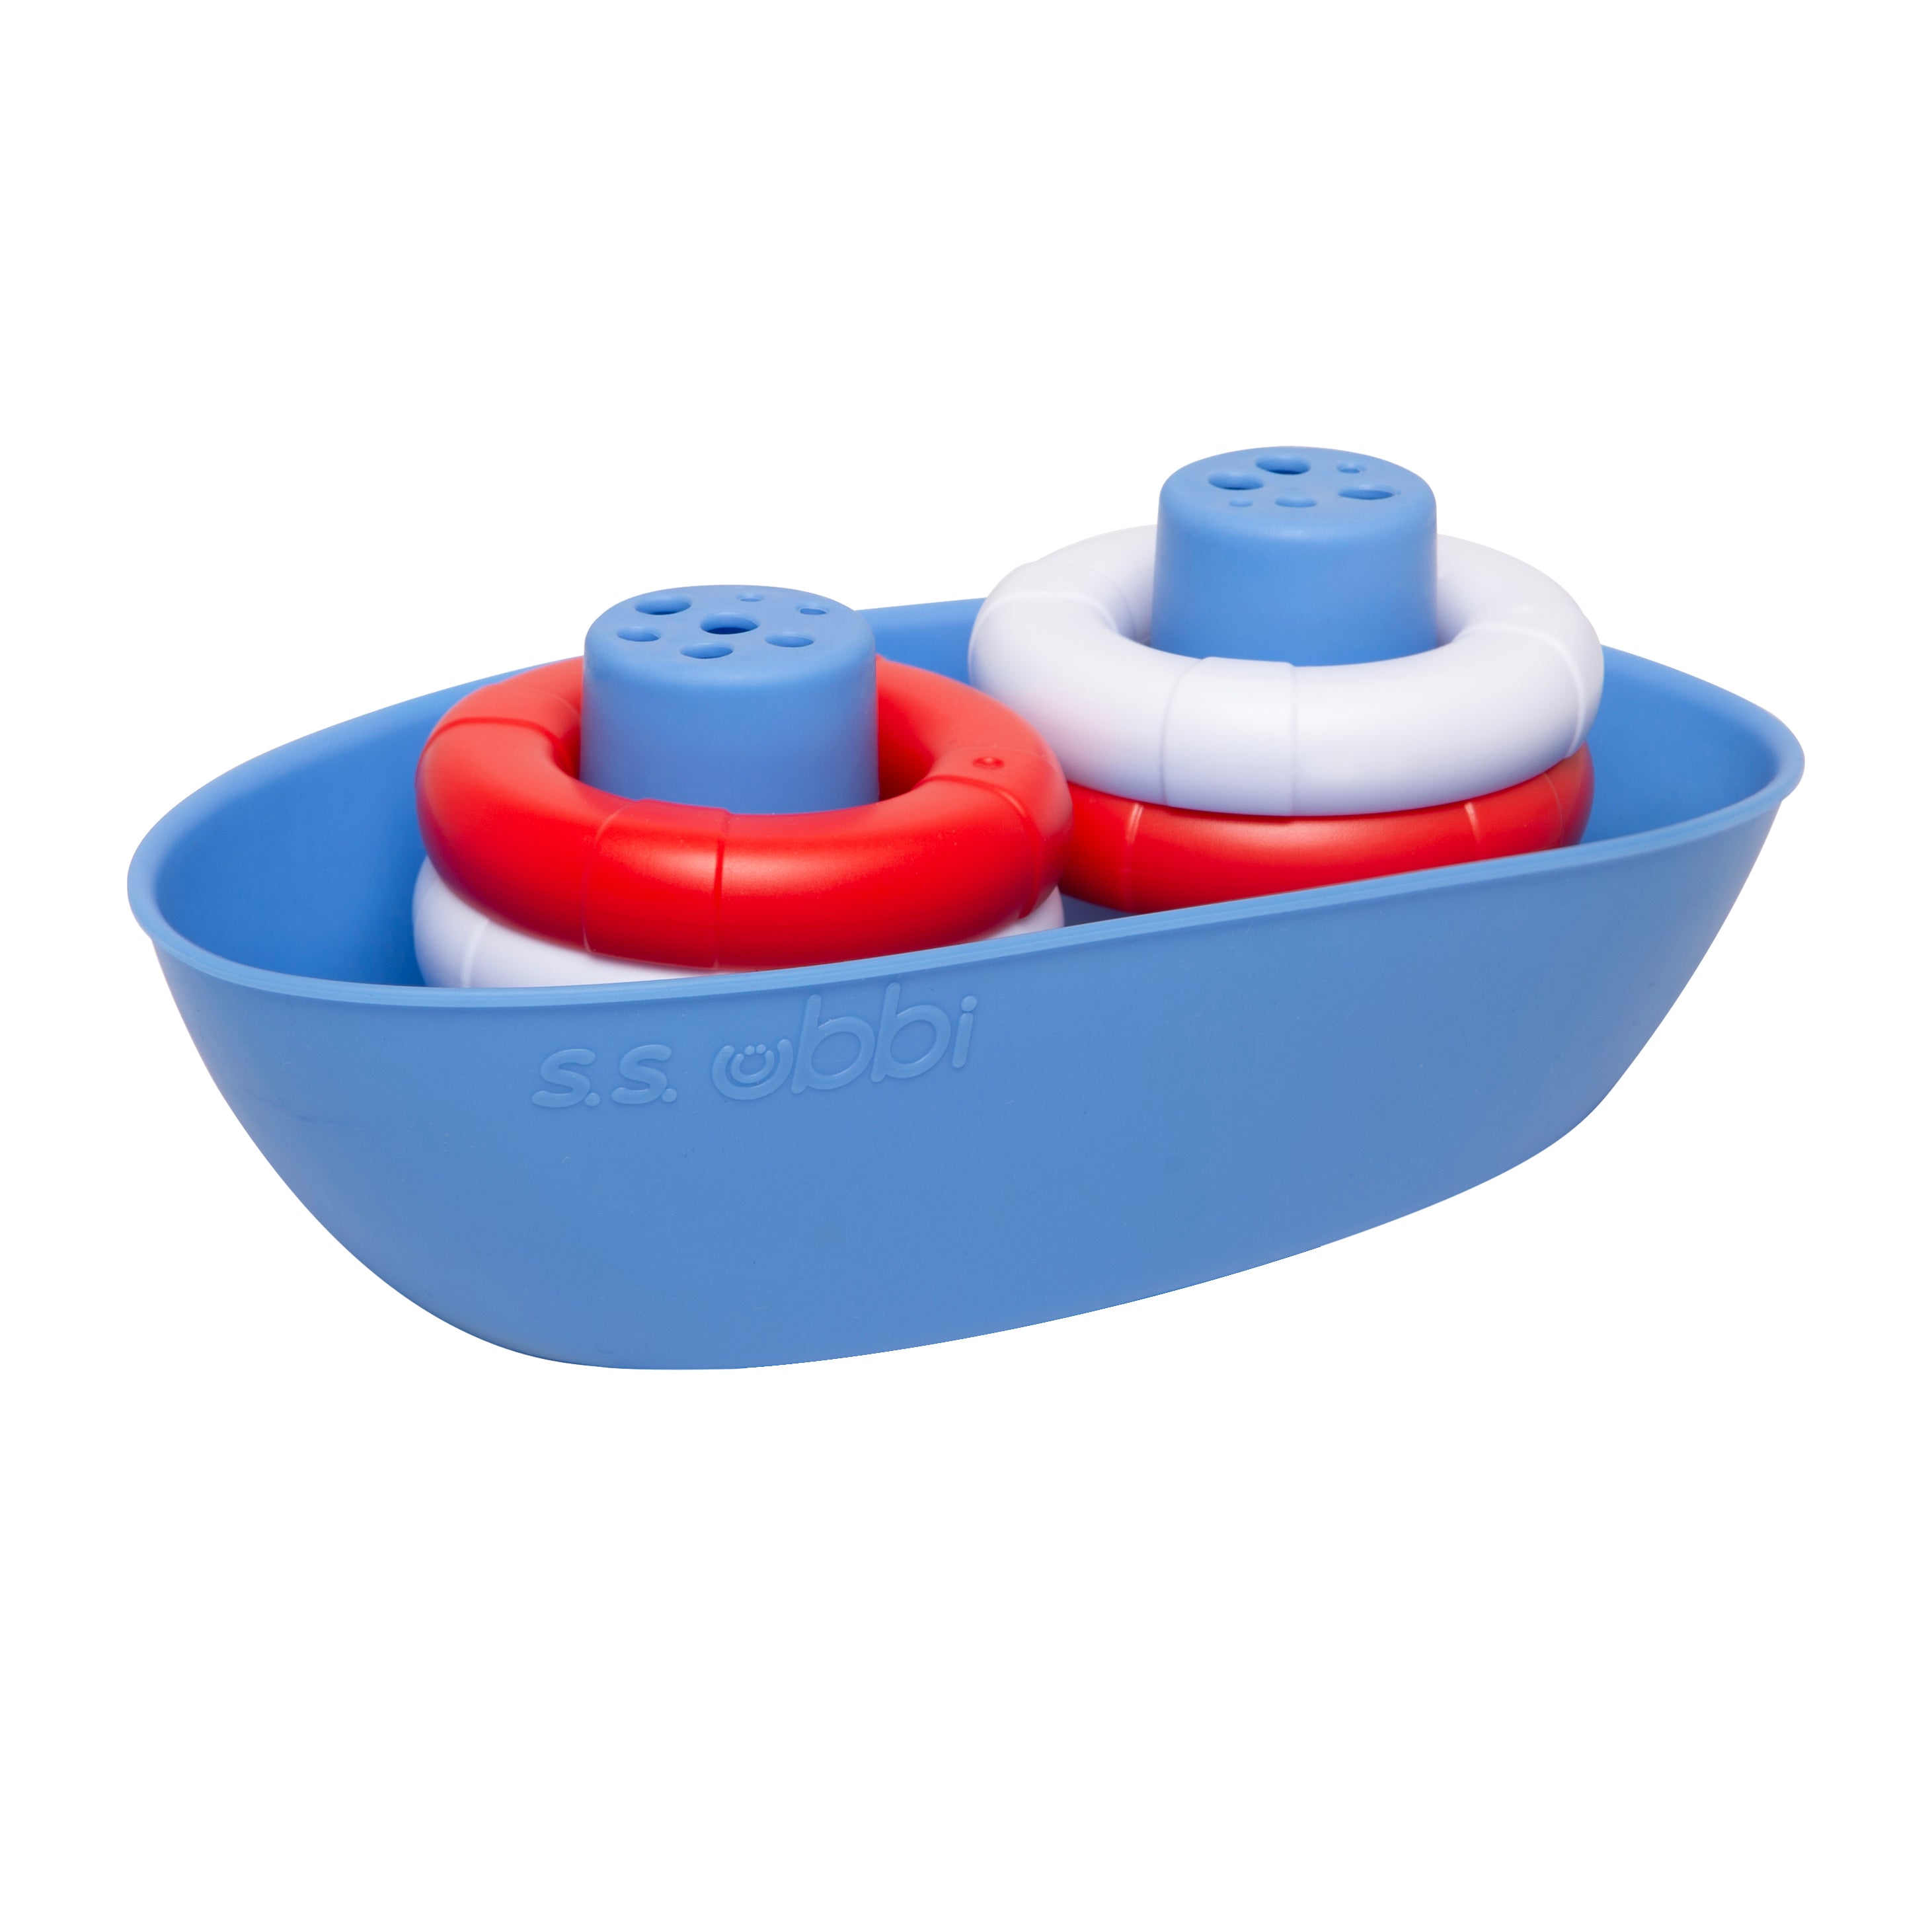 Ubbi boat and buoys bath toy – ubbiworld